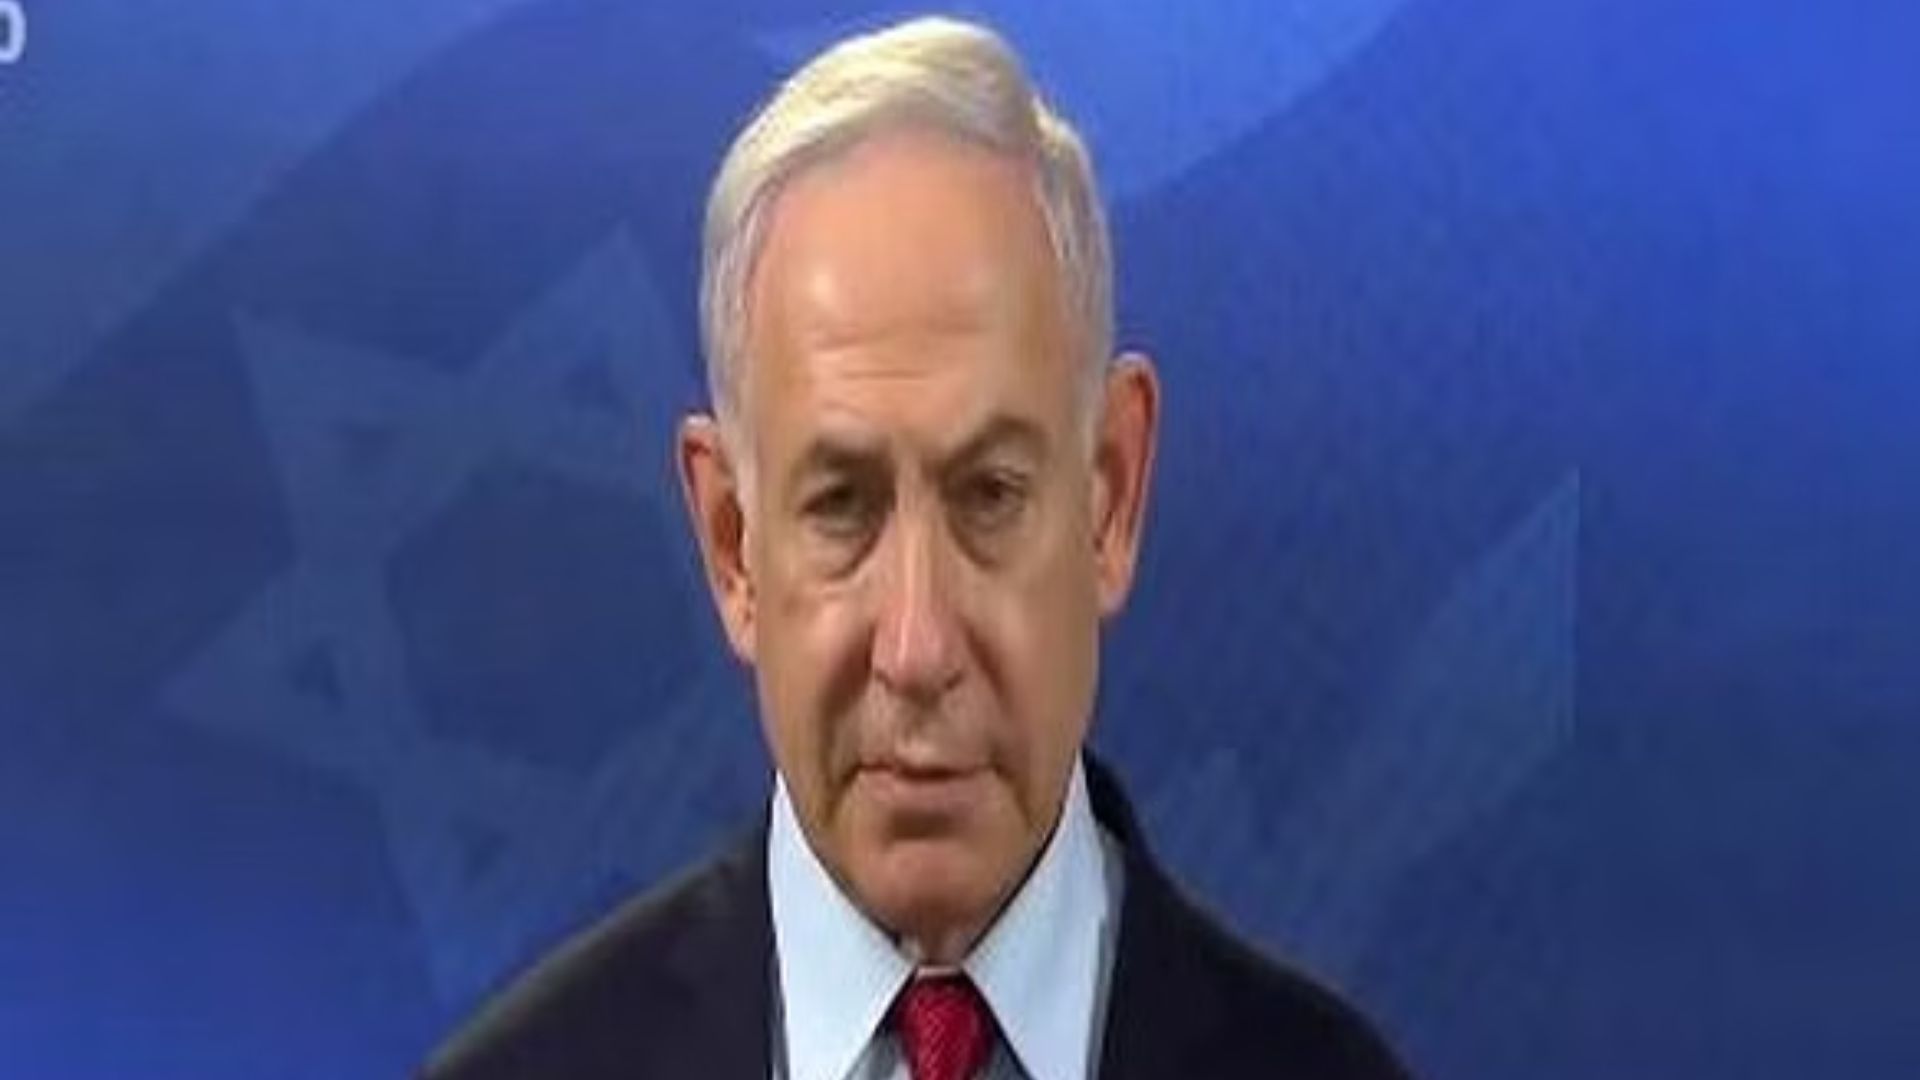 Netanyahu tells US: Israel opposes establishment of Palestinian state as part of any post-war scenario